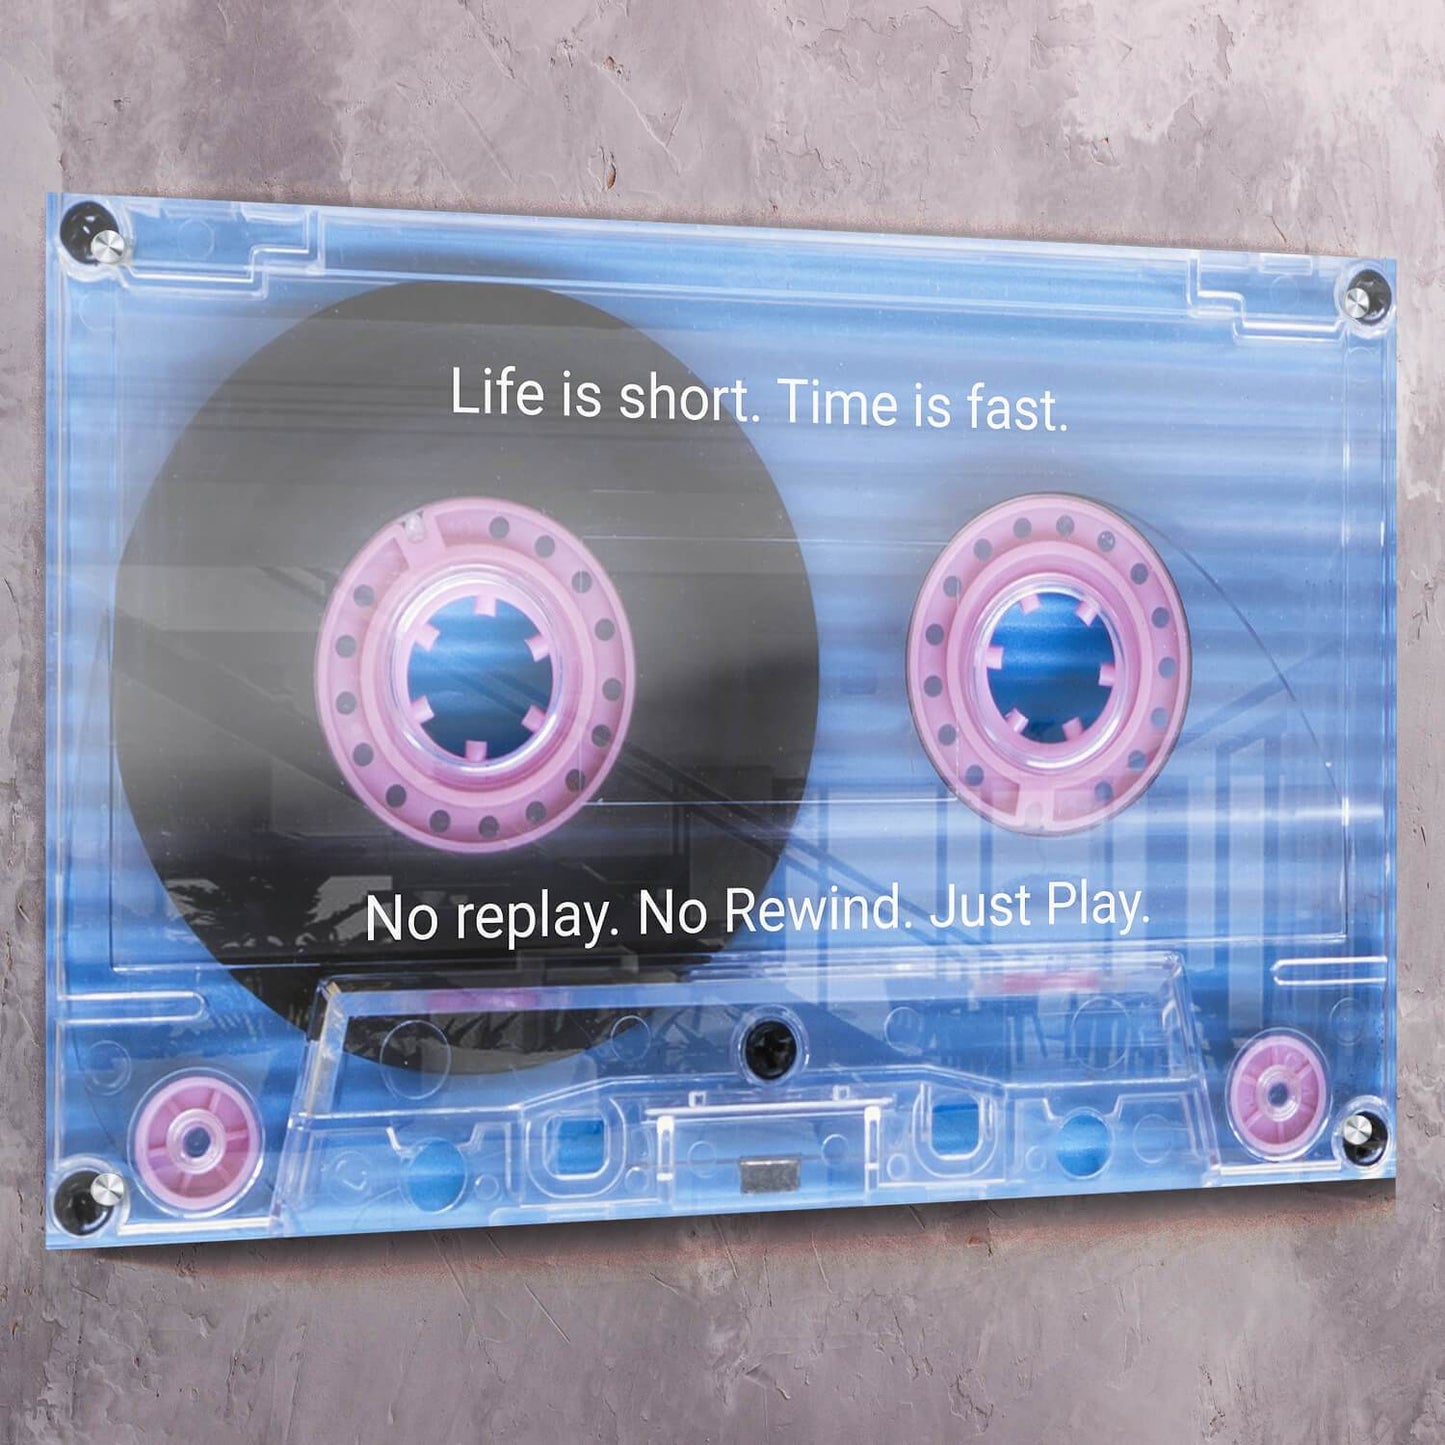 Cassette Tape Life is Short - Time is Fast Wall Art | Inspirational Wall Art Motivational Wall Art Quotes Office Art | ImpaktMaker Exclusive Canvas Art Landscape